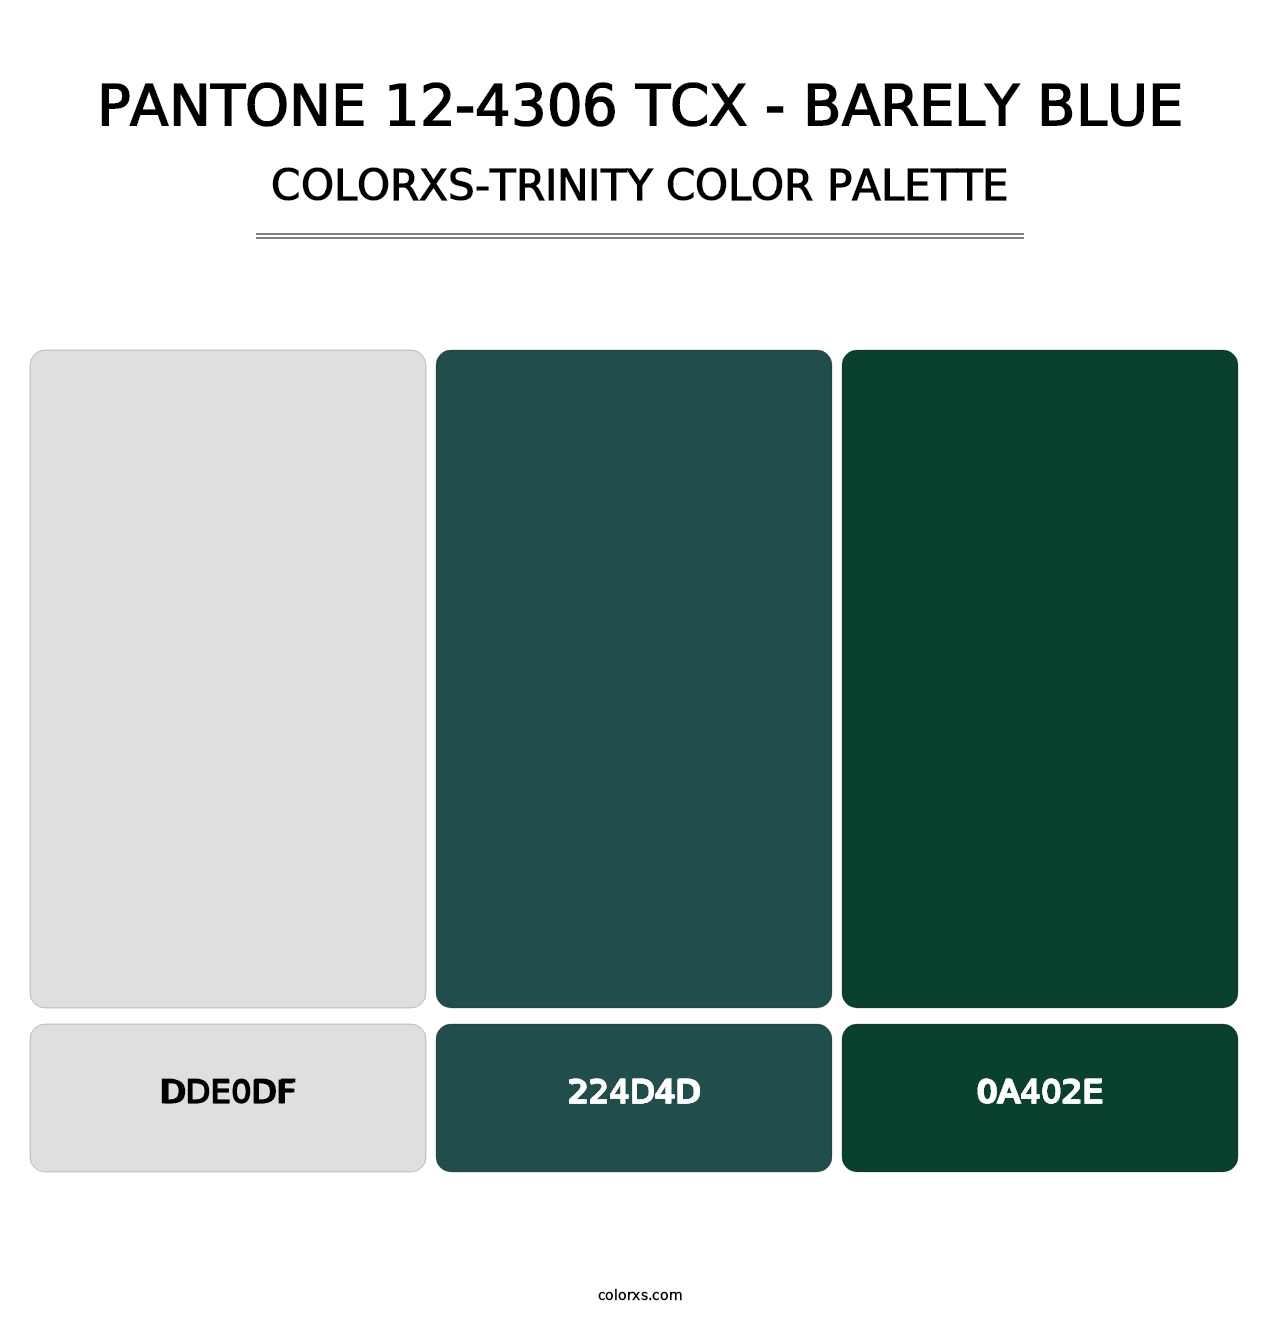 PANTONE 12-4306 TCX - Barely Blue - Colorxs Trinity Palette